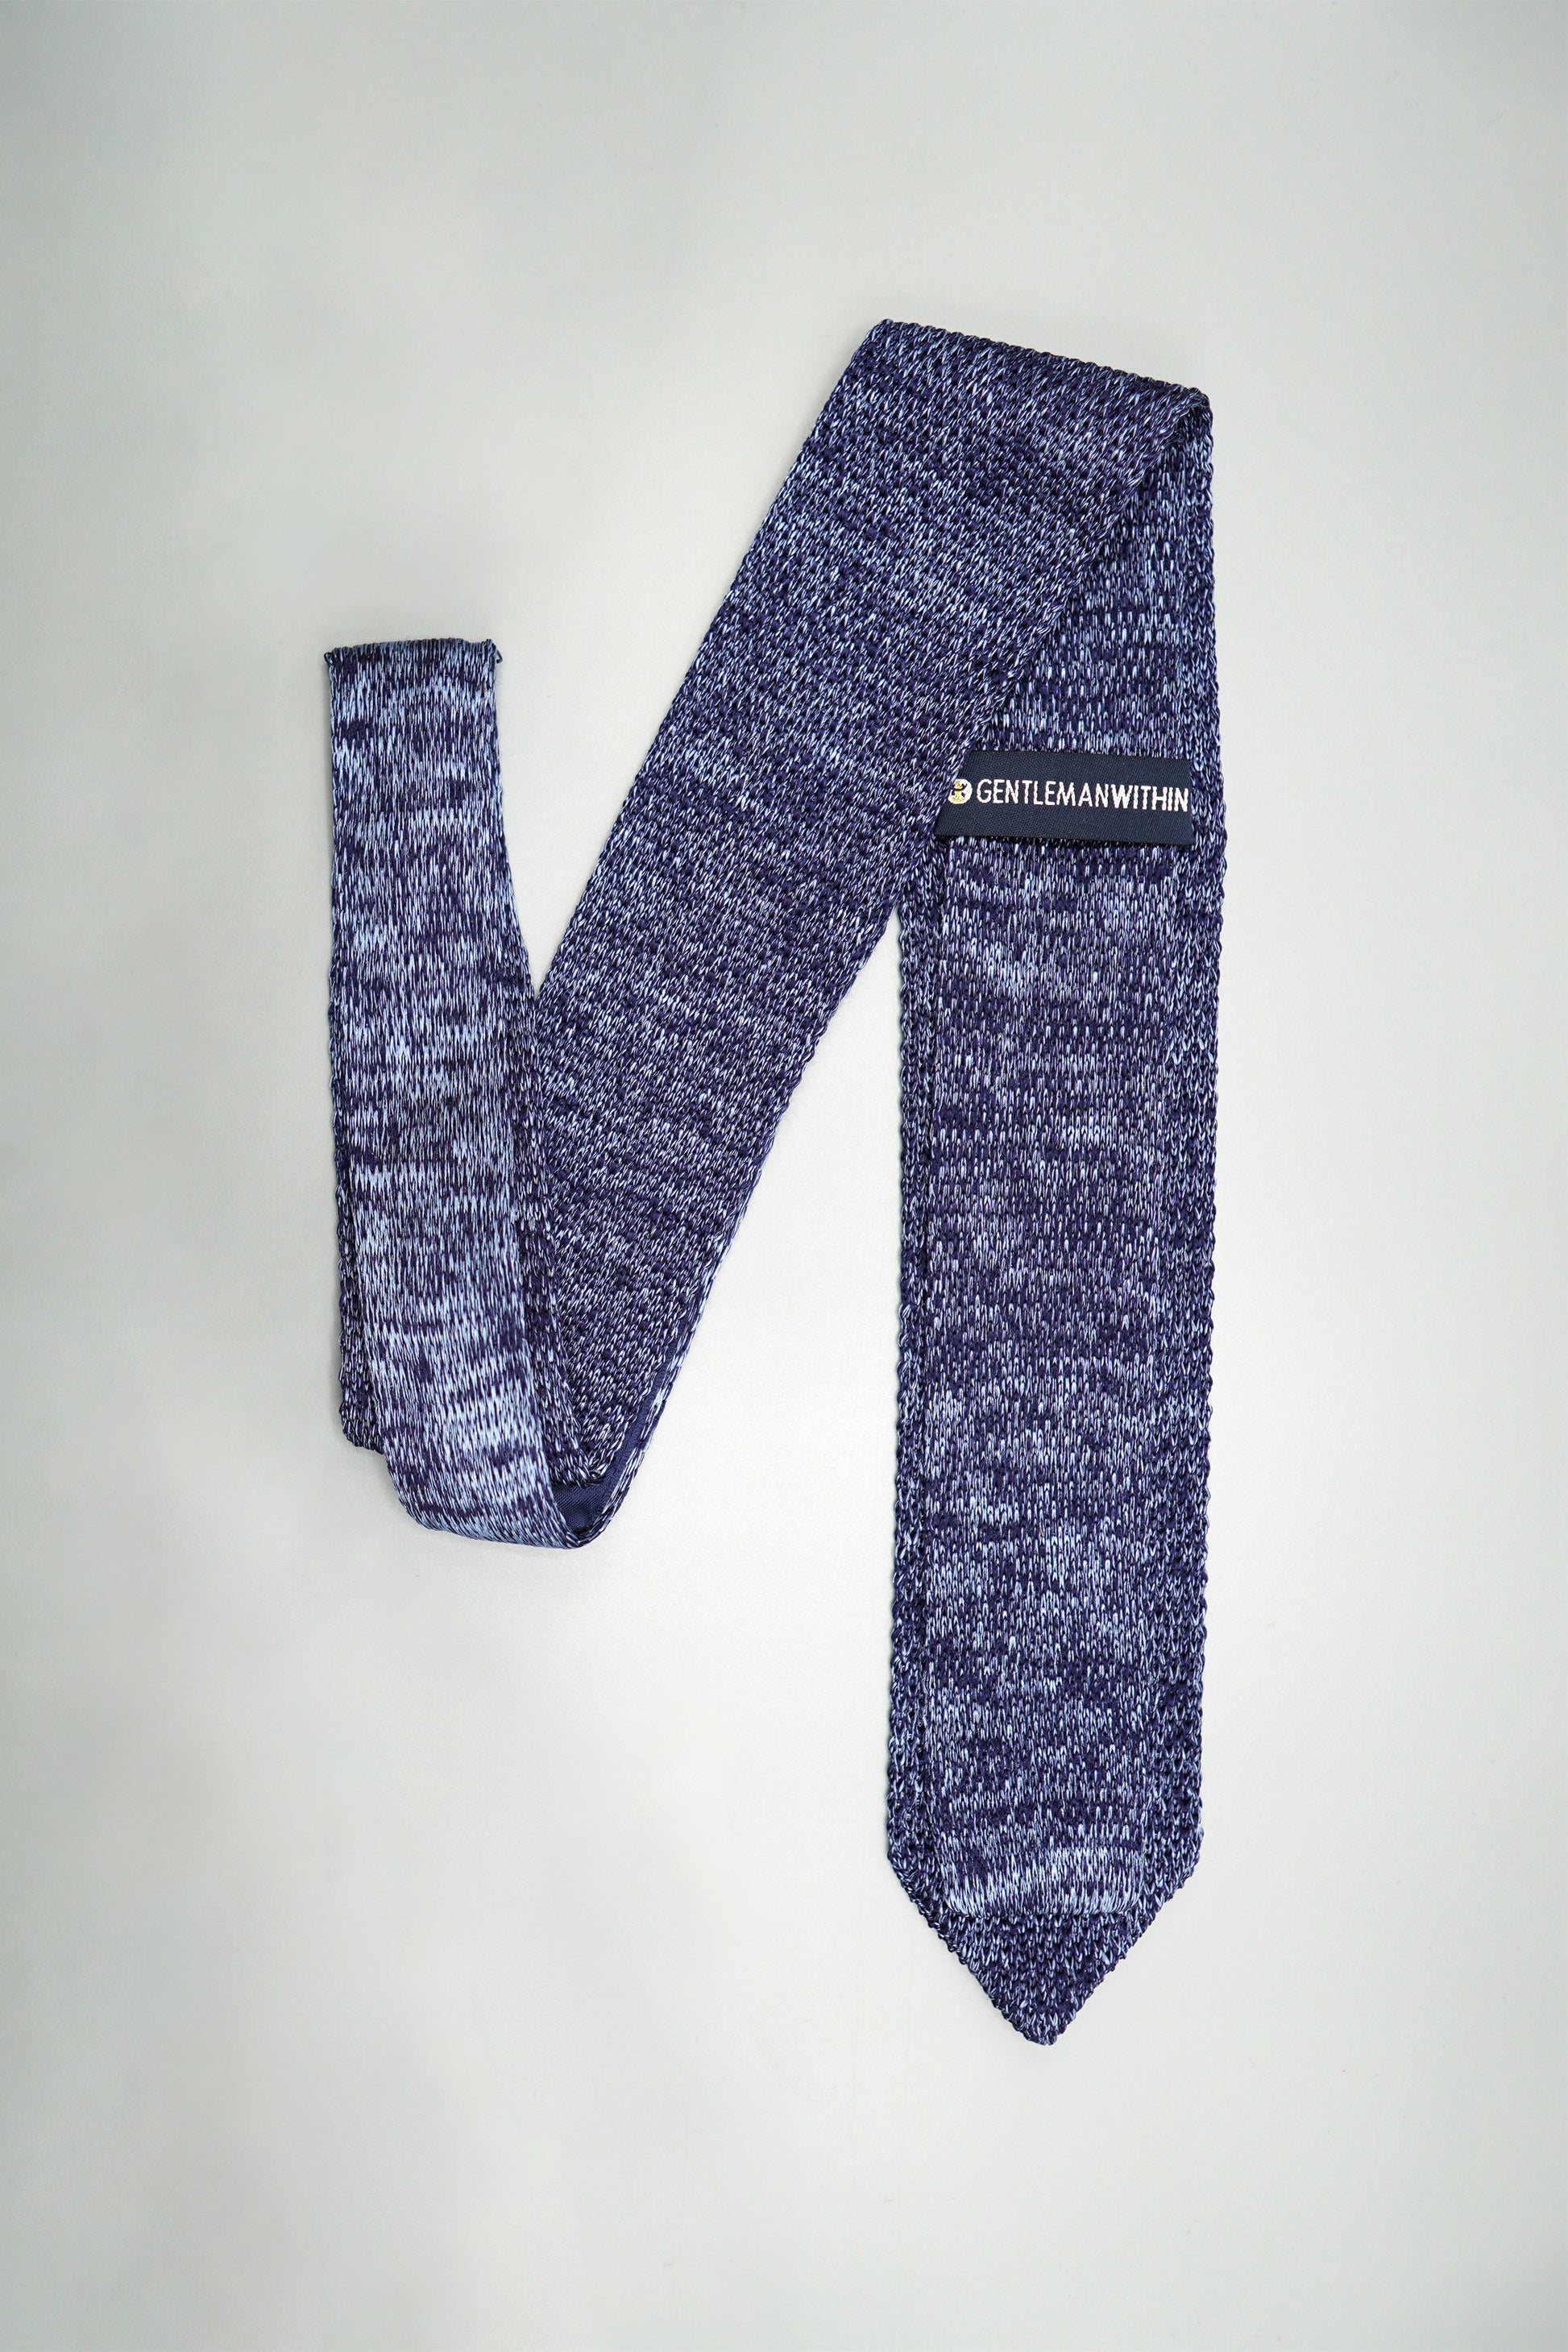 the saigon silk knit tie folded